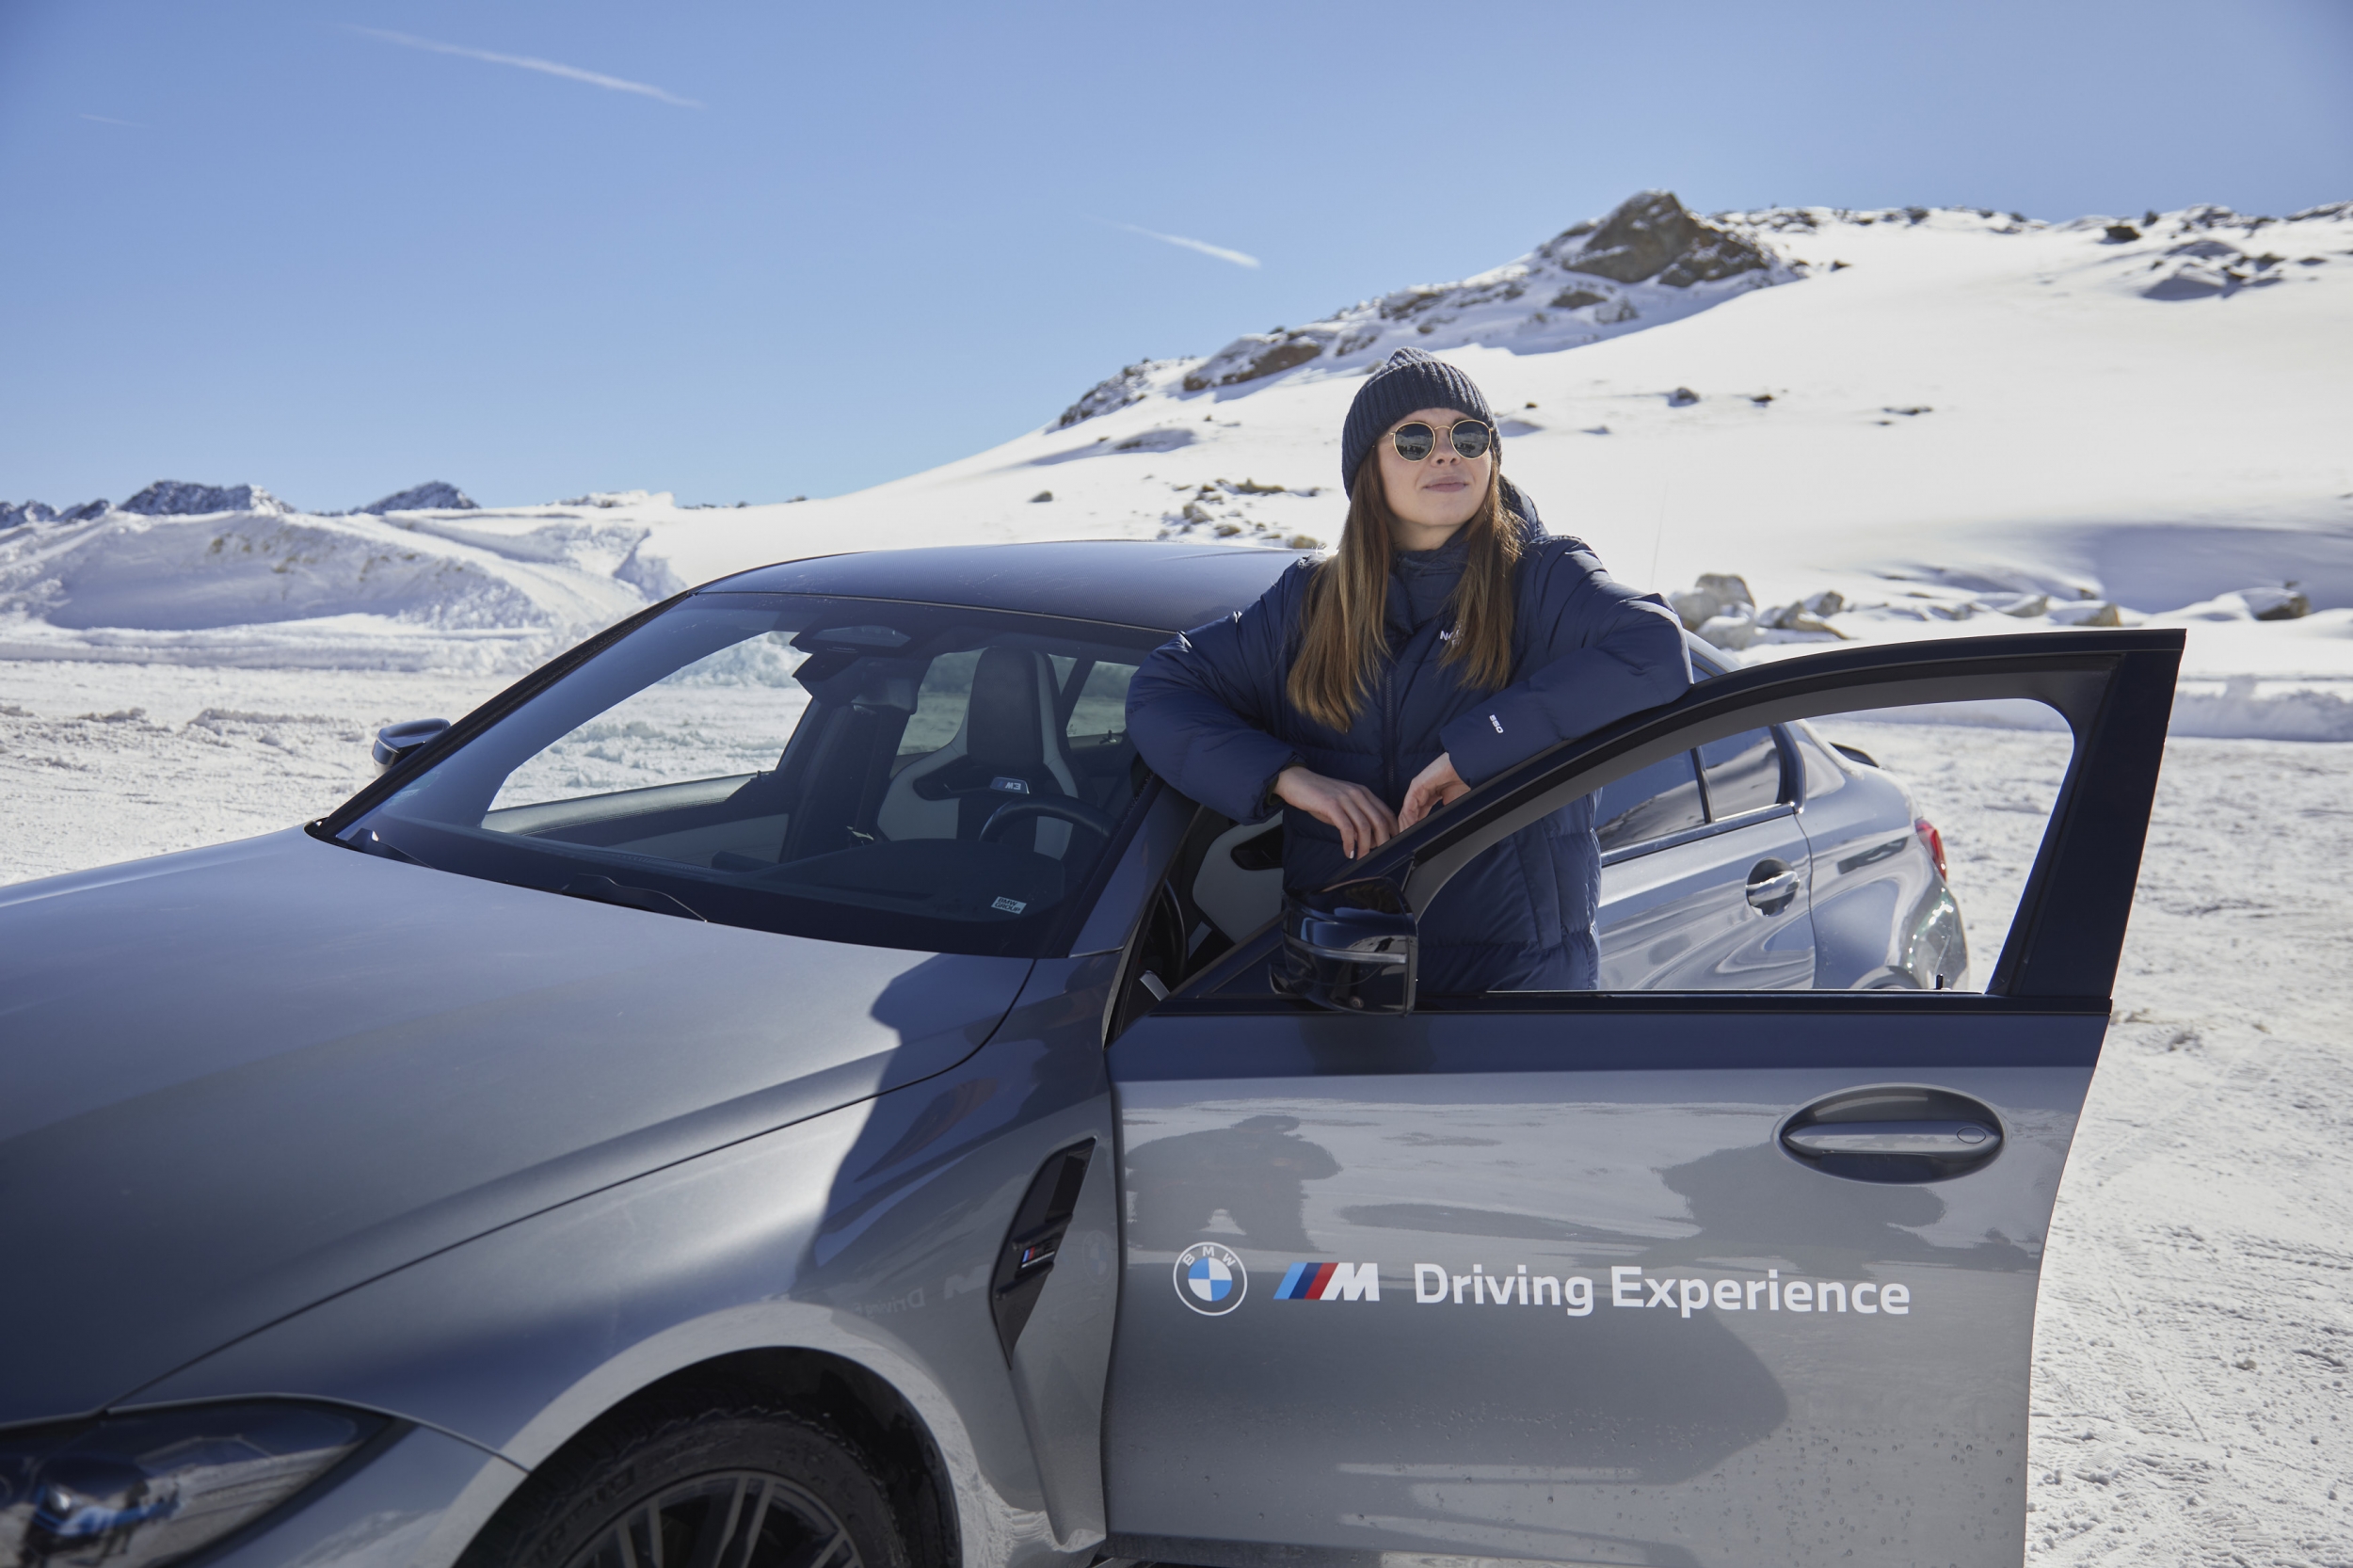 BMW M Driving Experience am Gletscher in Sölden